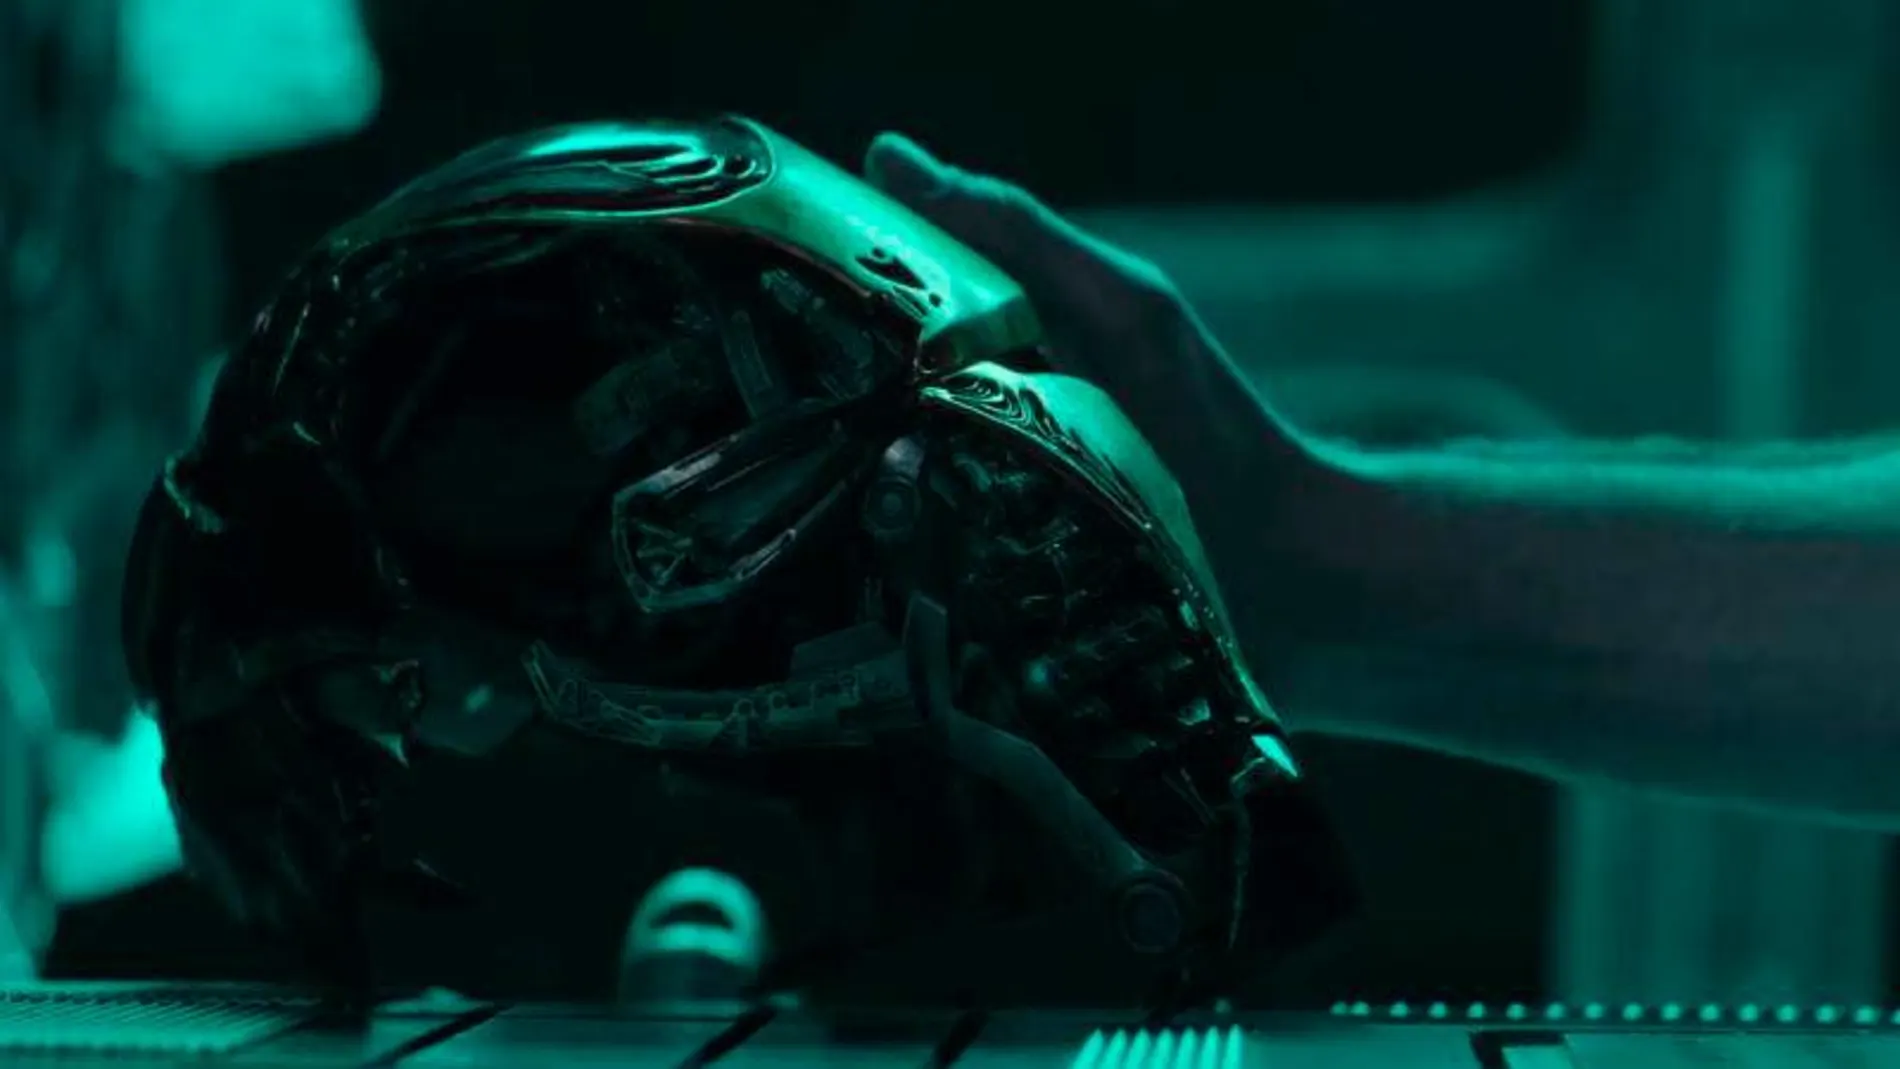 El casco de Tony Stark (Ironman) en Vengadores: Endgame